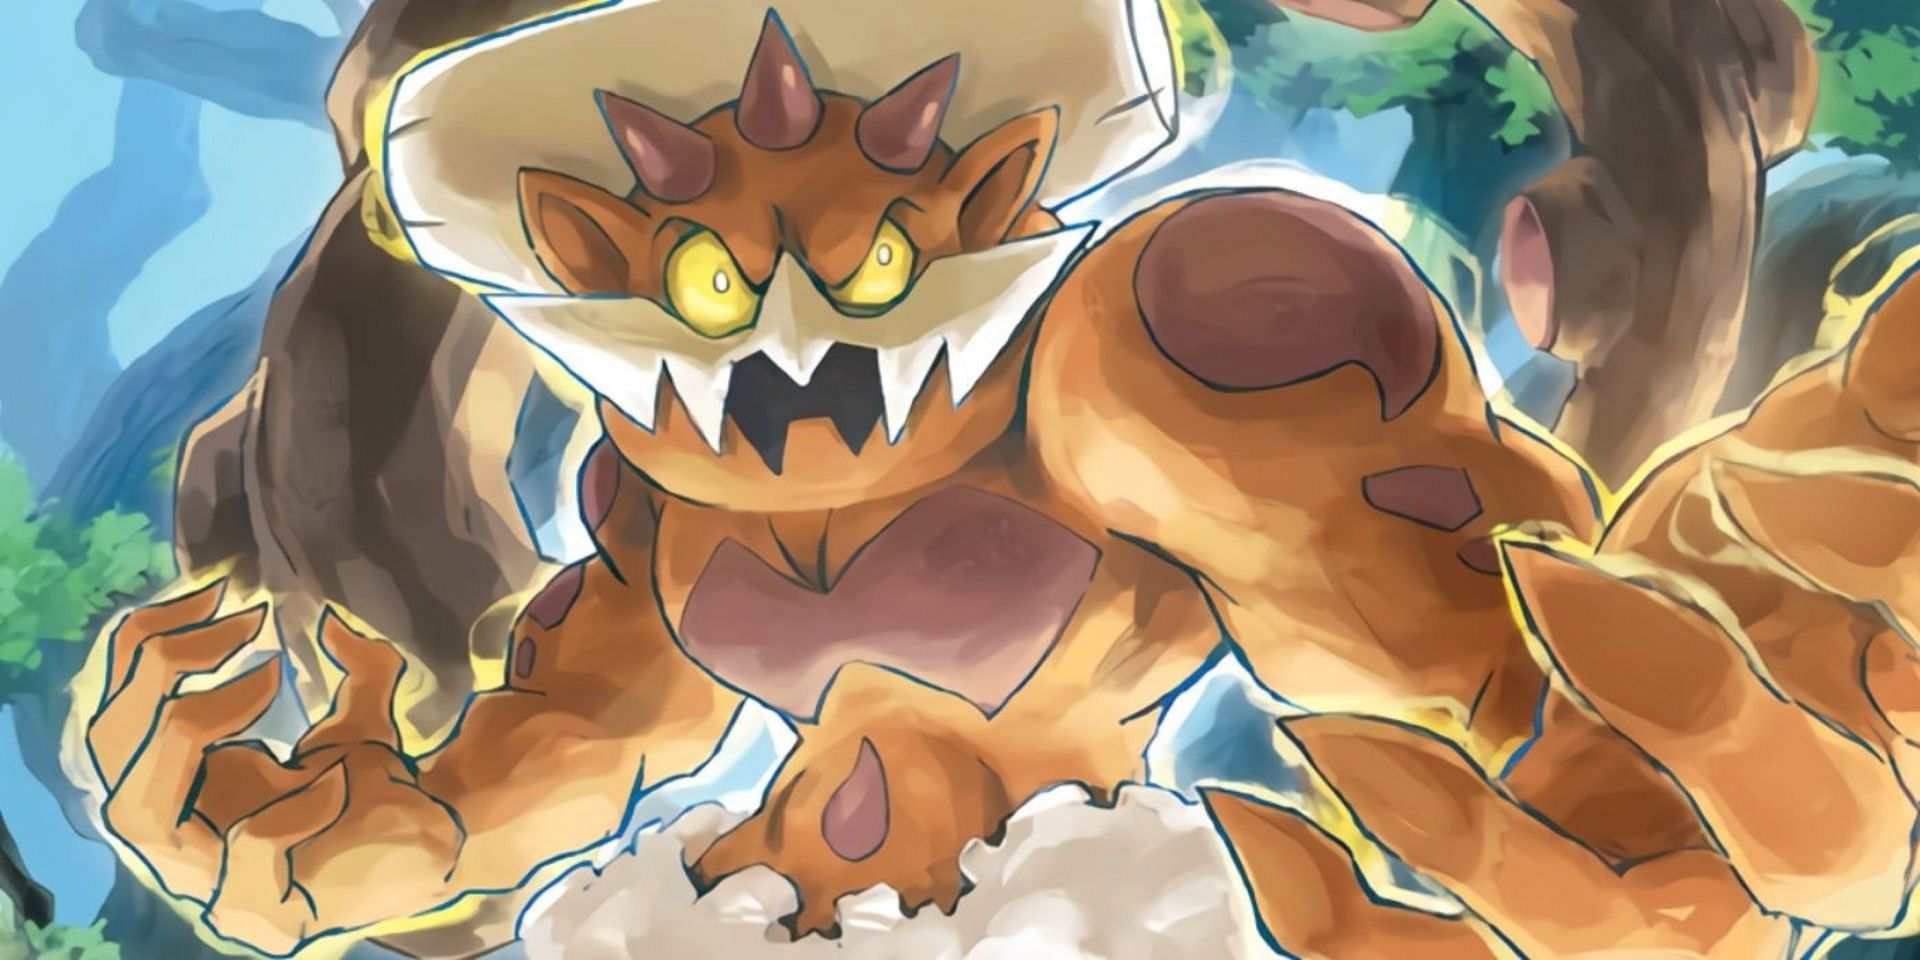 Landorus as it appears in the Pokemon Trading Card game (Image via The Pokemon Company)